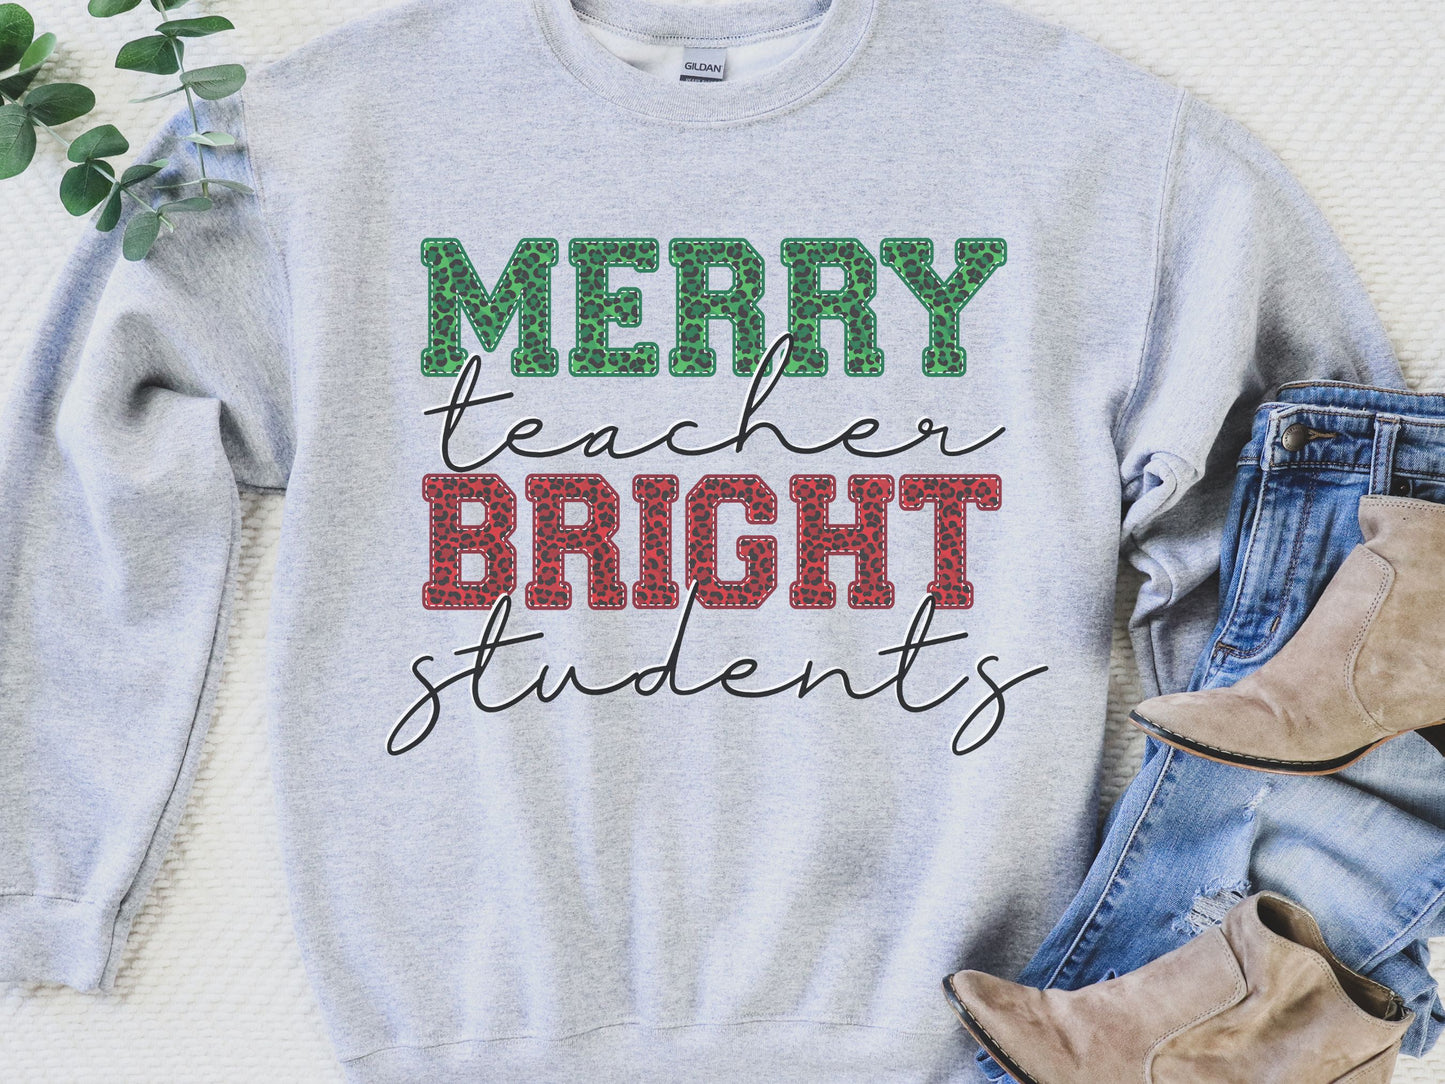 Merry Teacher Bright Students Teacher Christmas Sweatshirt